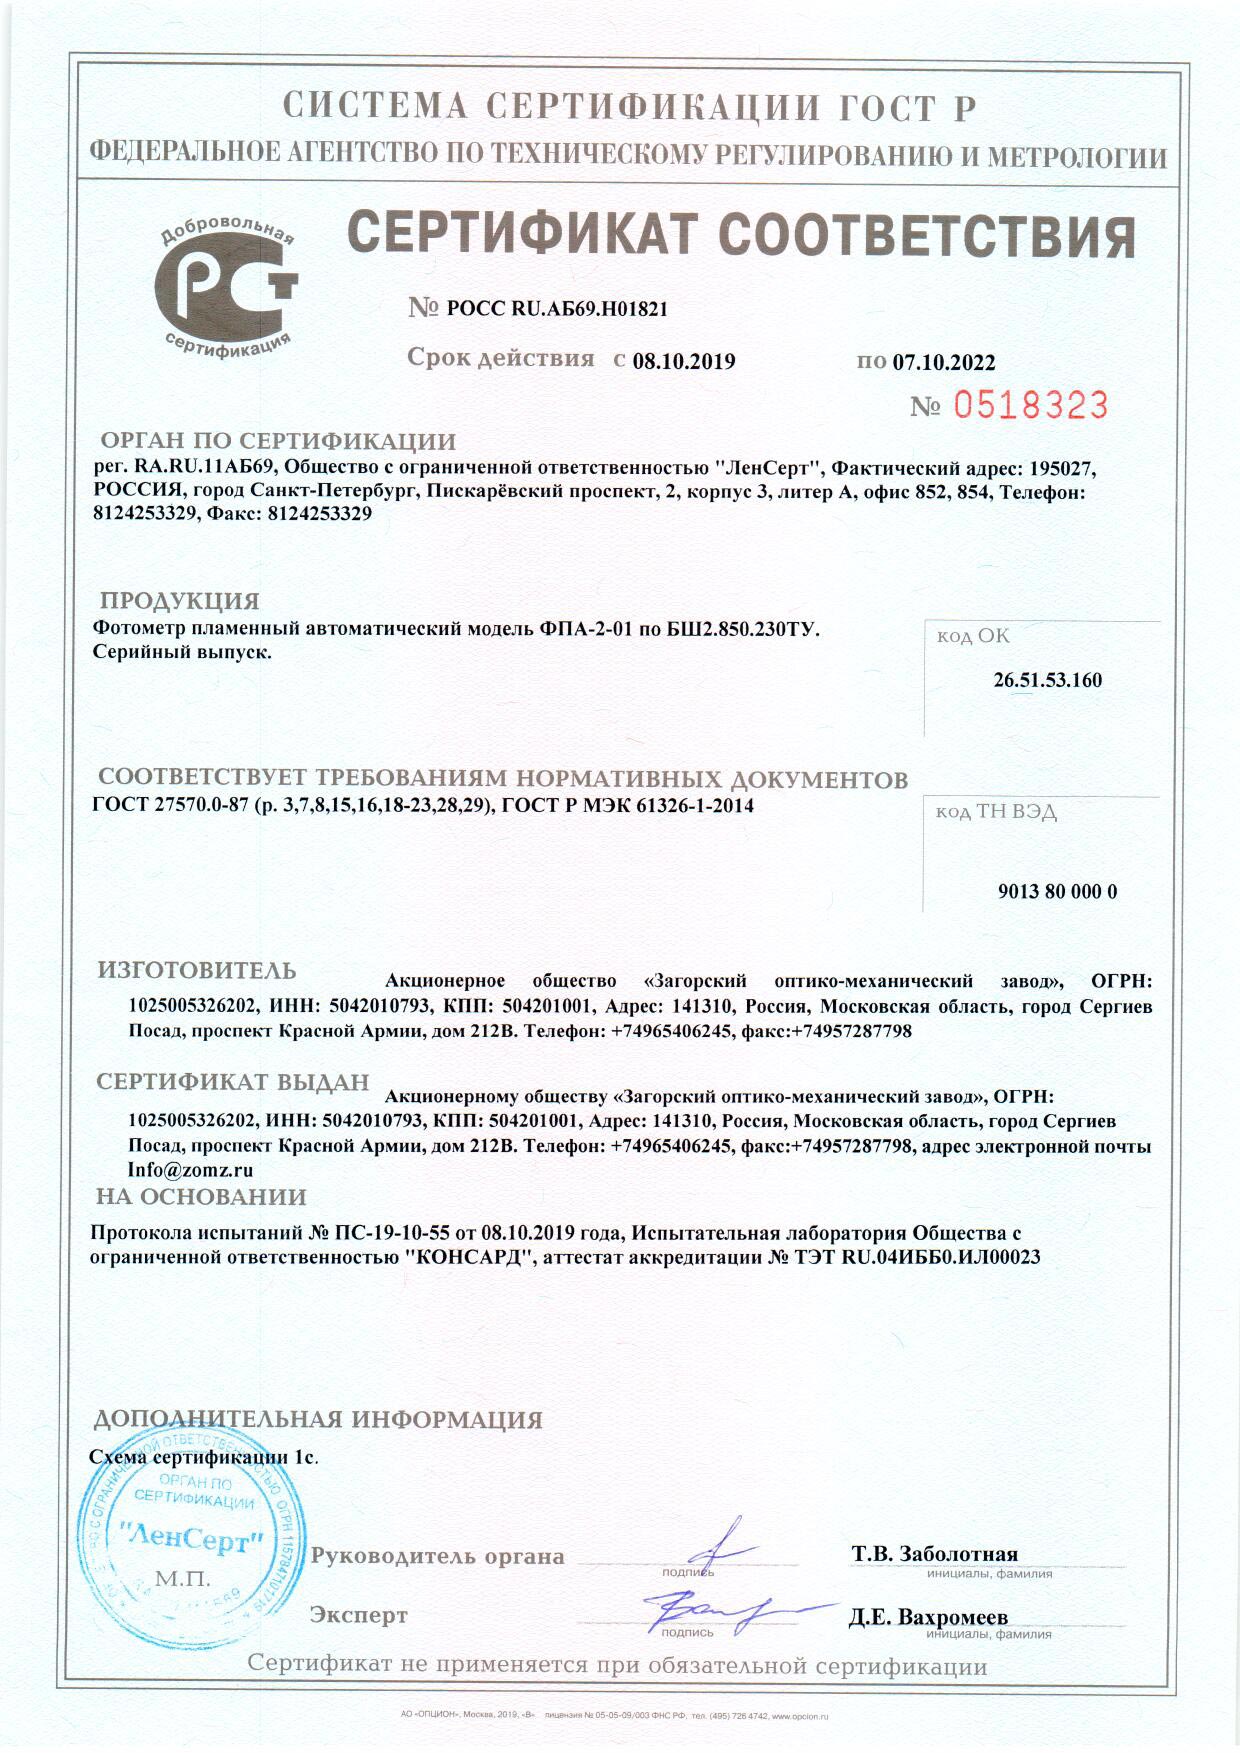 сертификат ФПА-2-01 Фотометр пламенный 